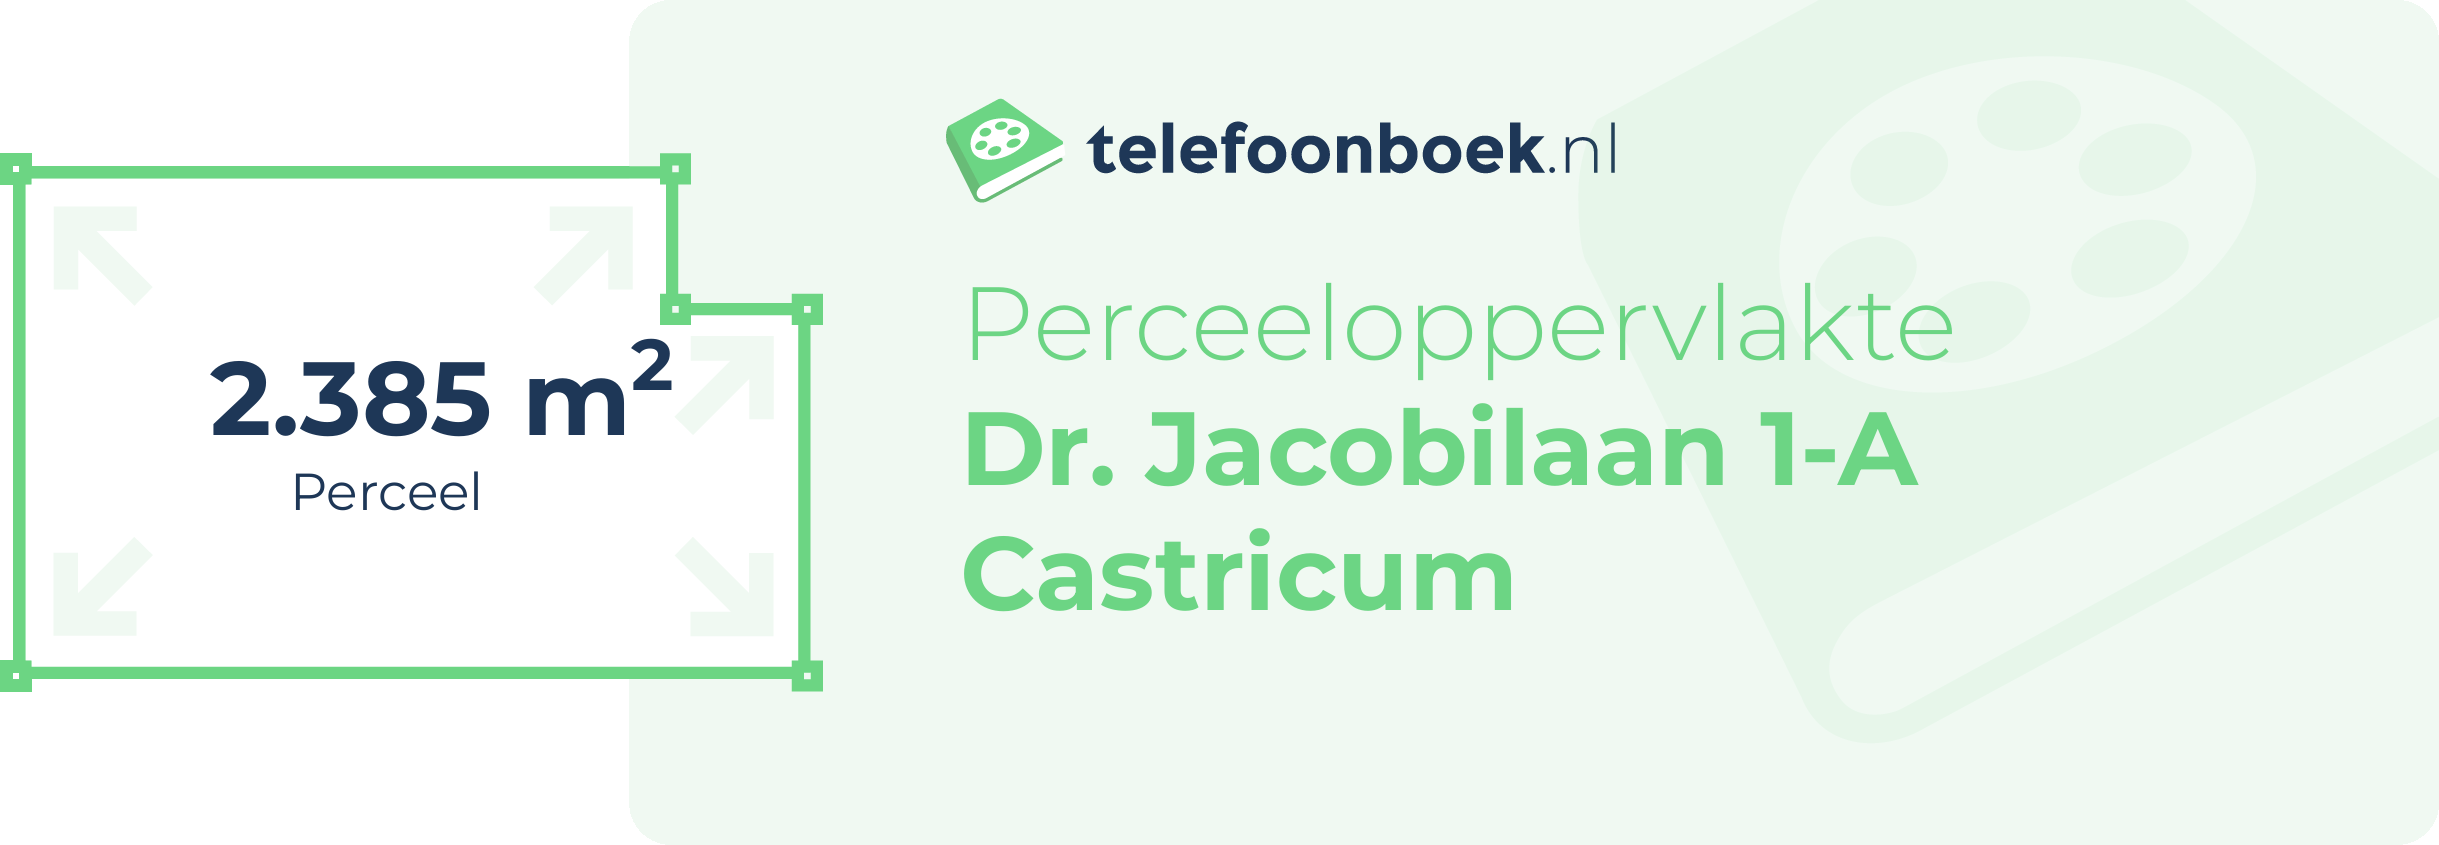 Perceeloppervlakte Dr. Jacobilaan 1-A Castricum